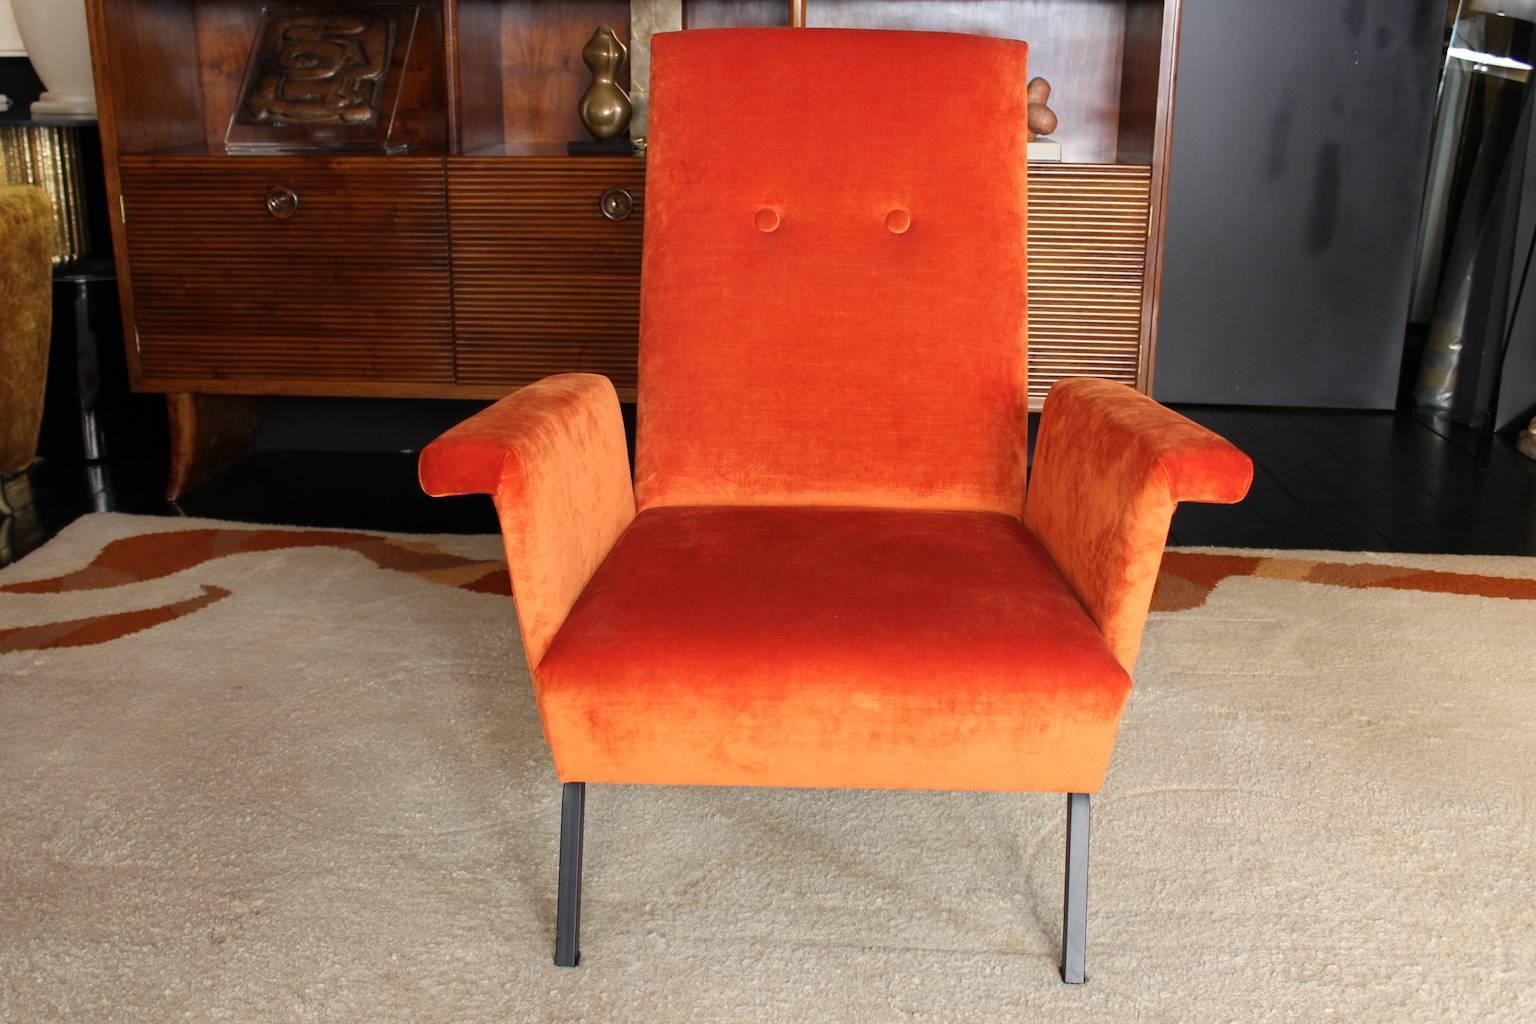 Pair of original 1960s Italian armchairs in orange velvet, metal structure new fabric and padding.